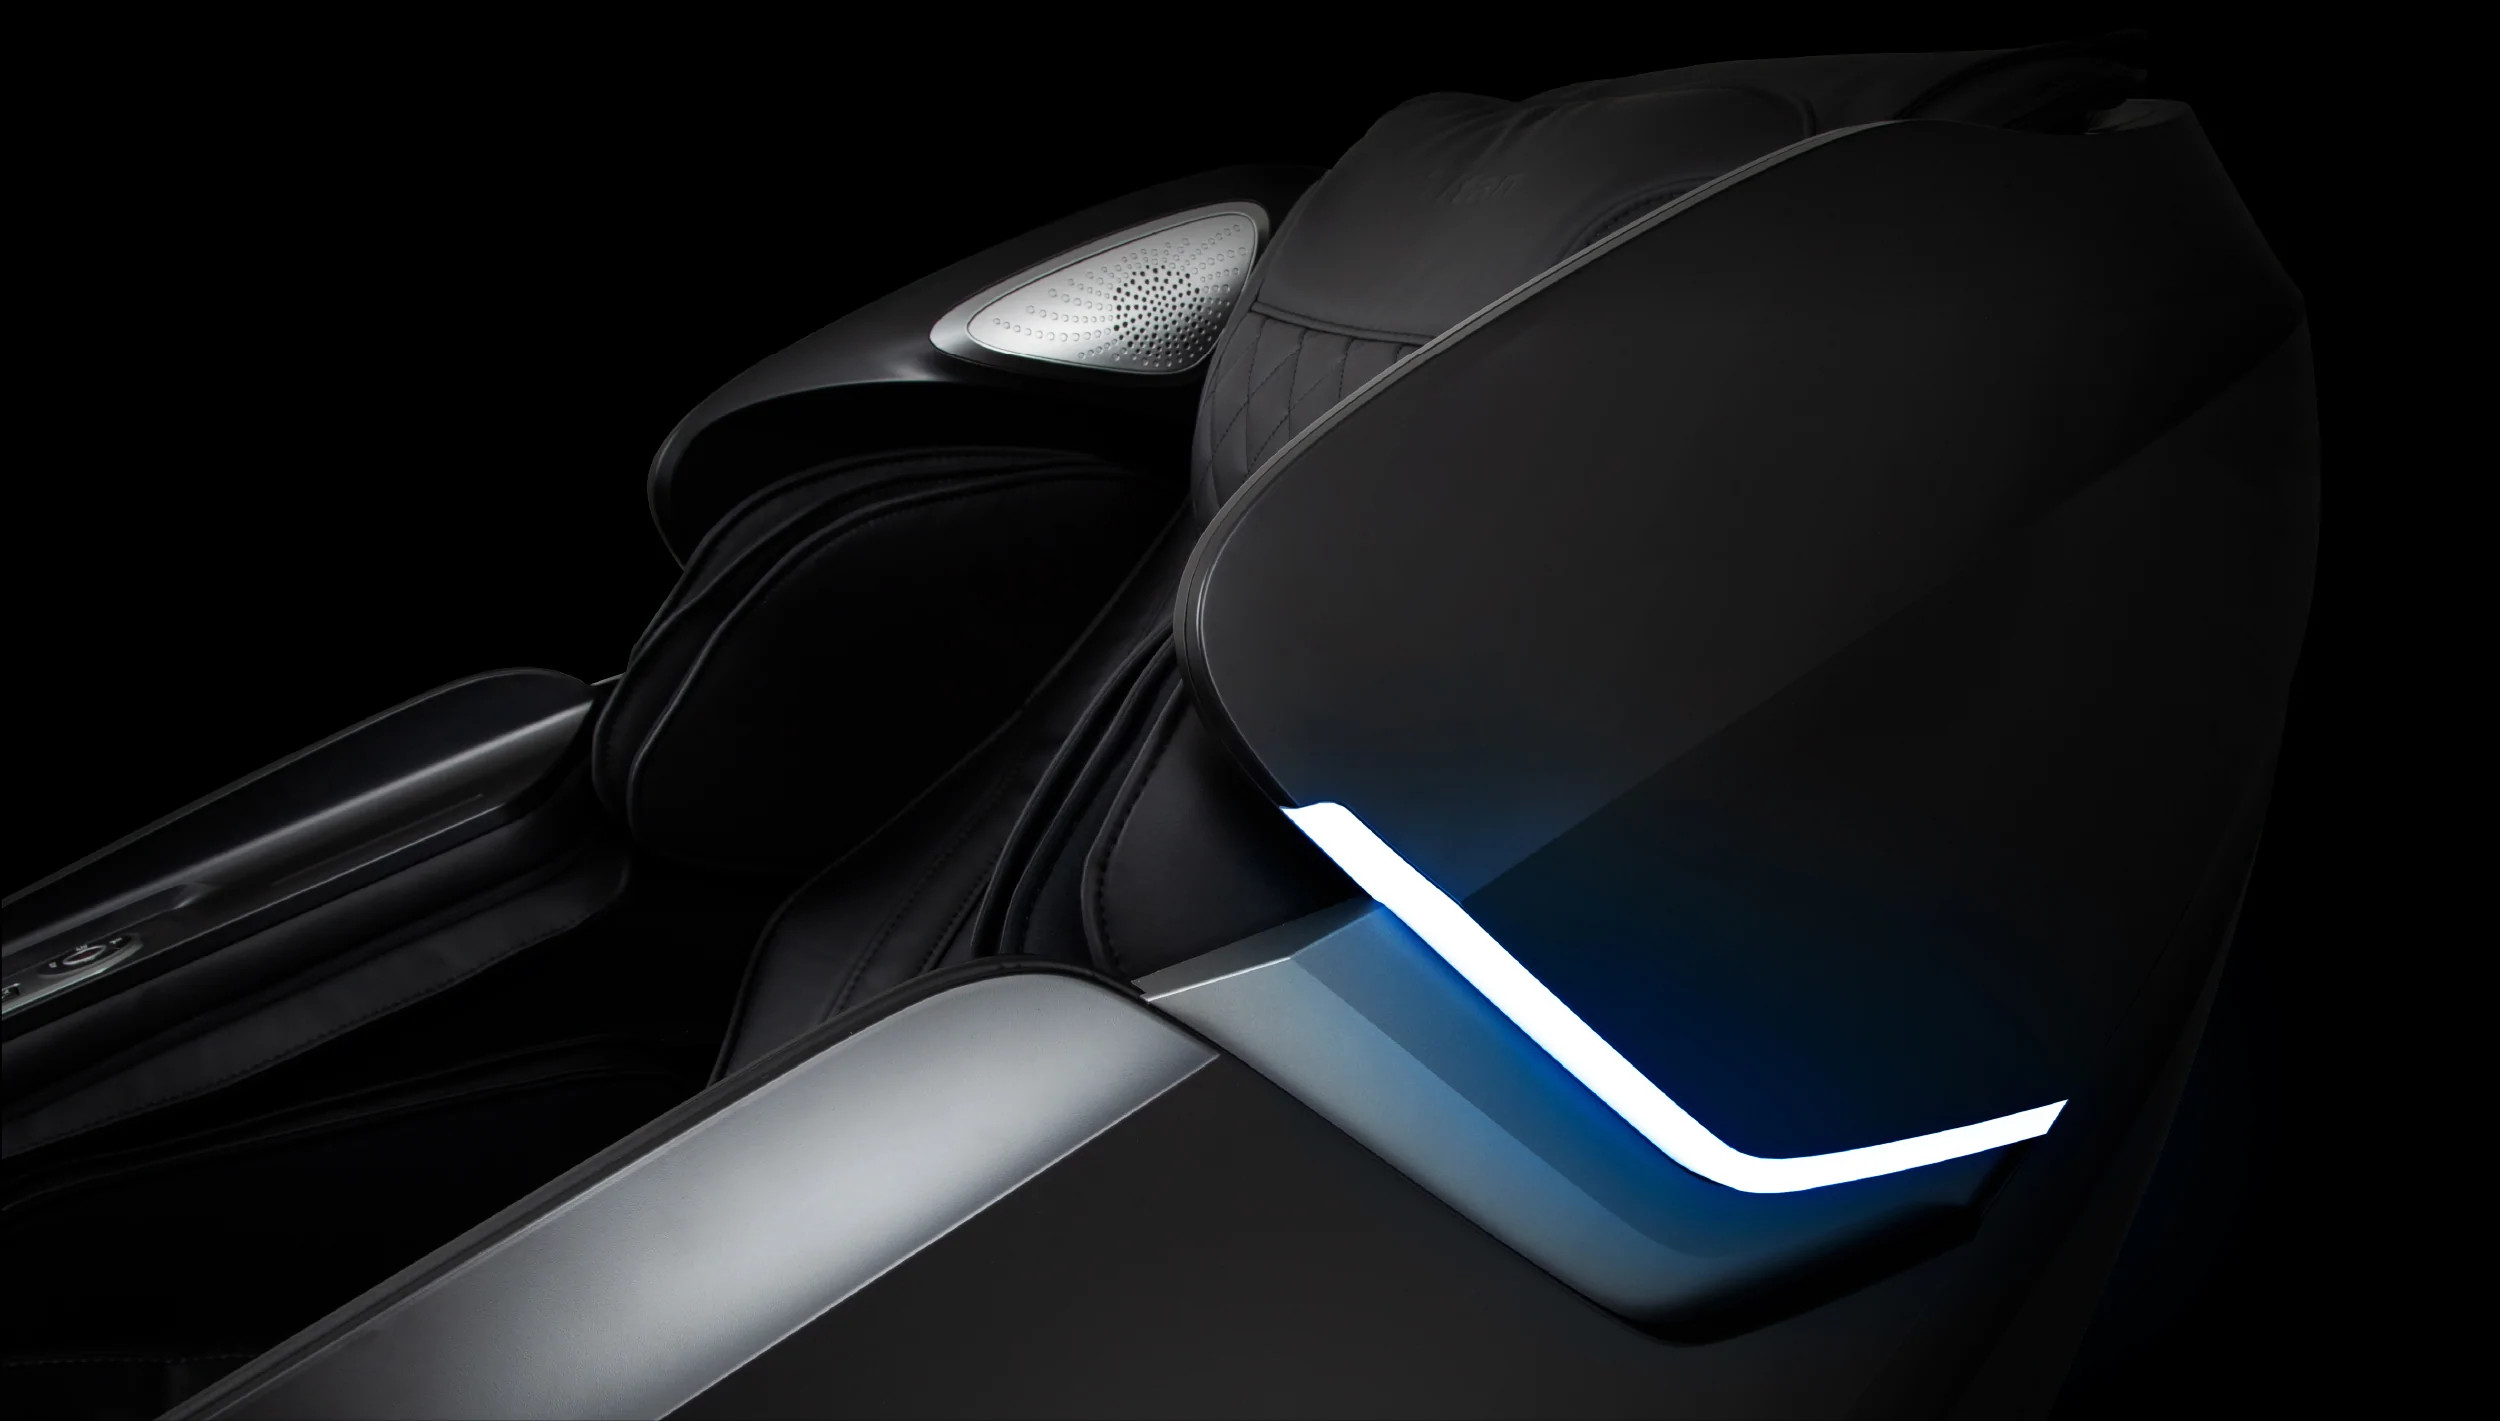 Titan Pro Vigor 4D Full Body Massage Chair, Luxurious New Design